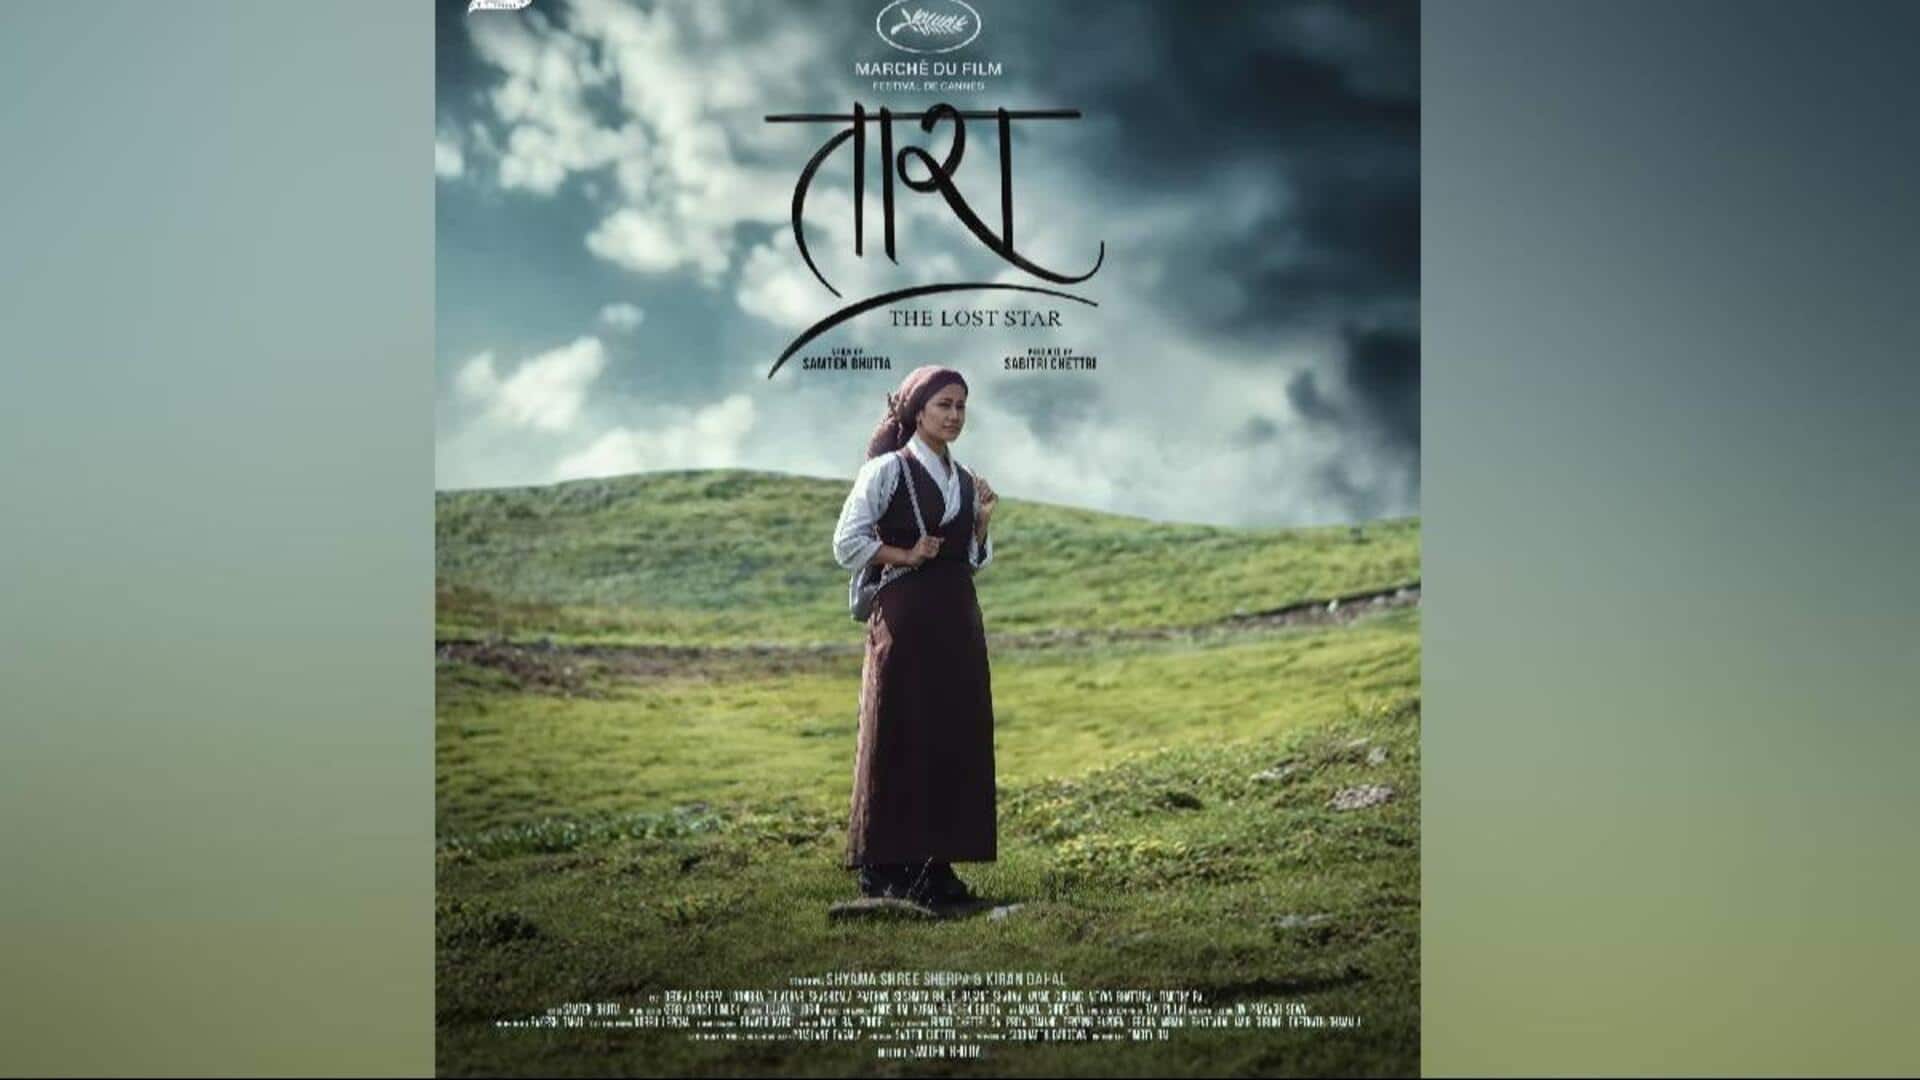 Sikkimese film 'Tara' to be showcased at Cannes Film Market